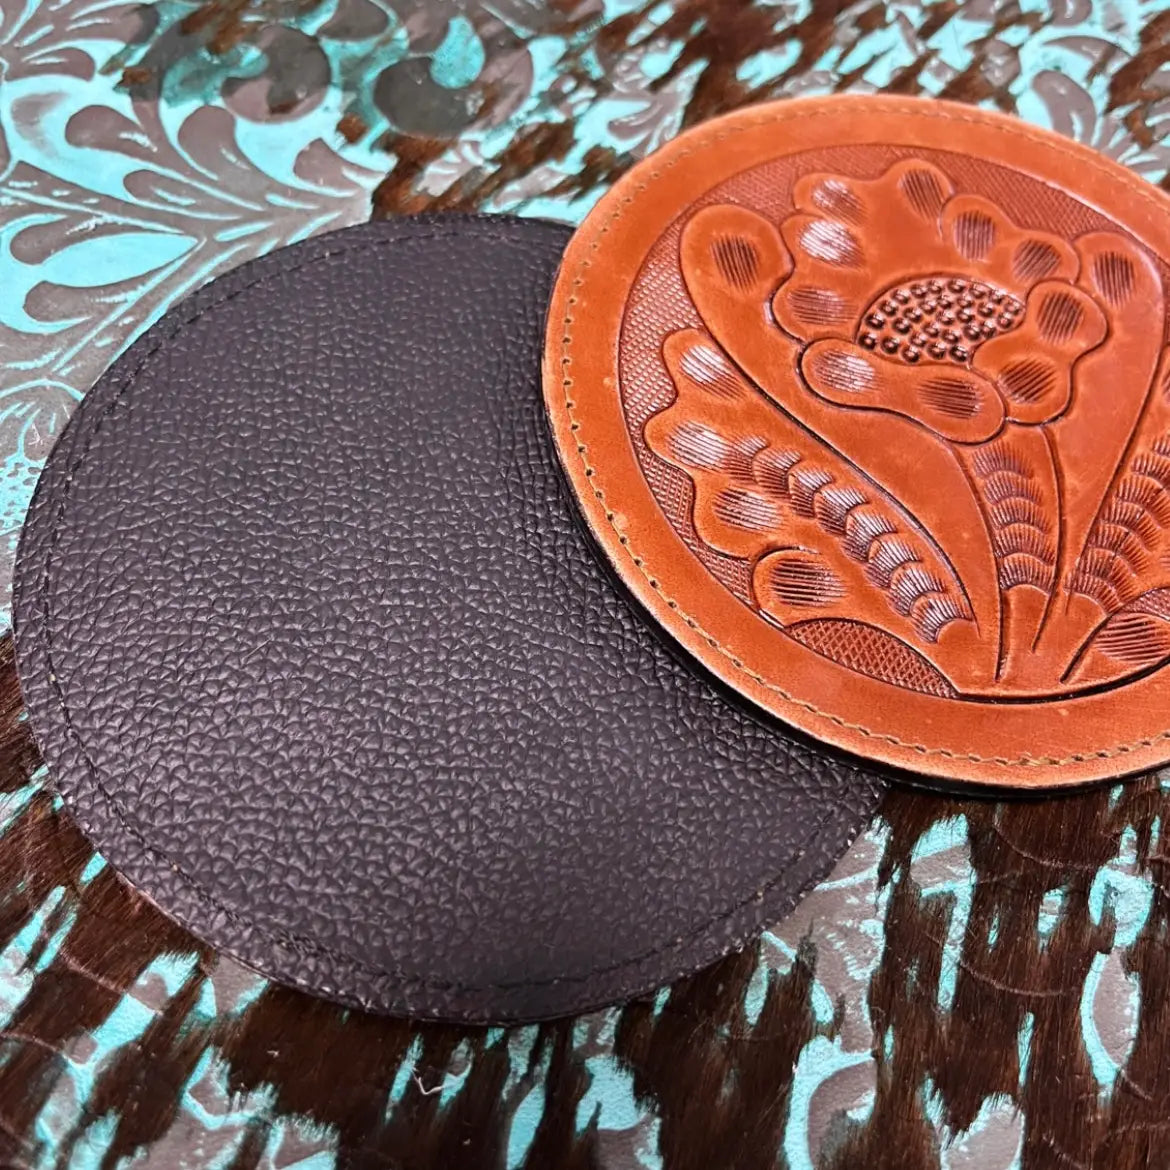 Western Tooled Leather Coasters - 6pc Set